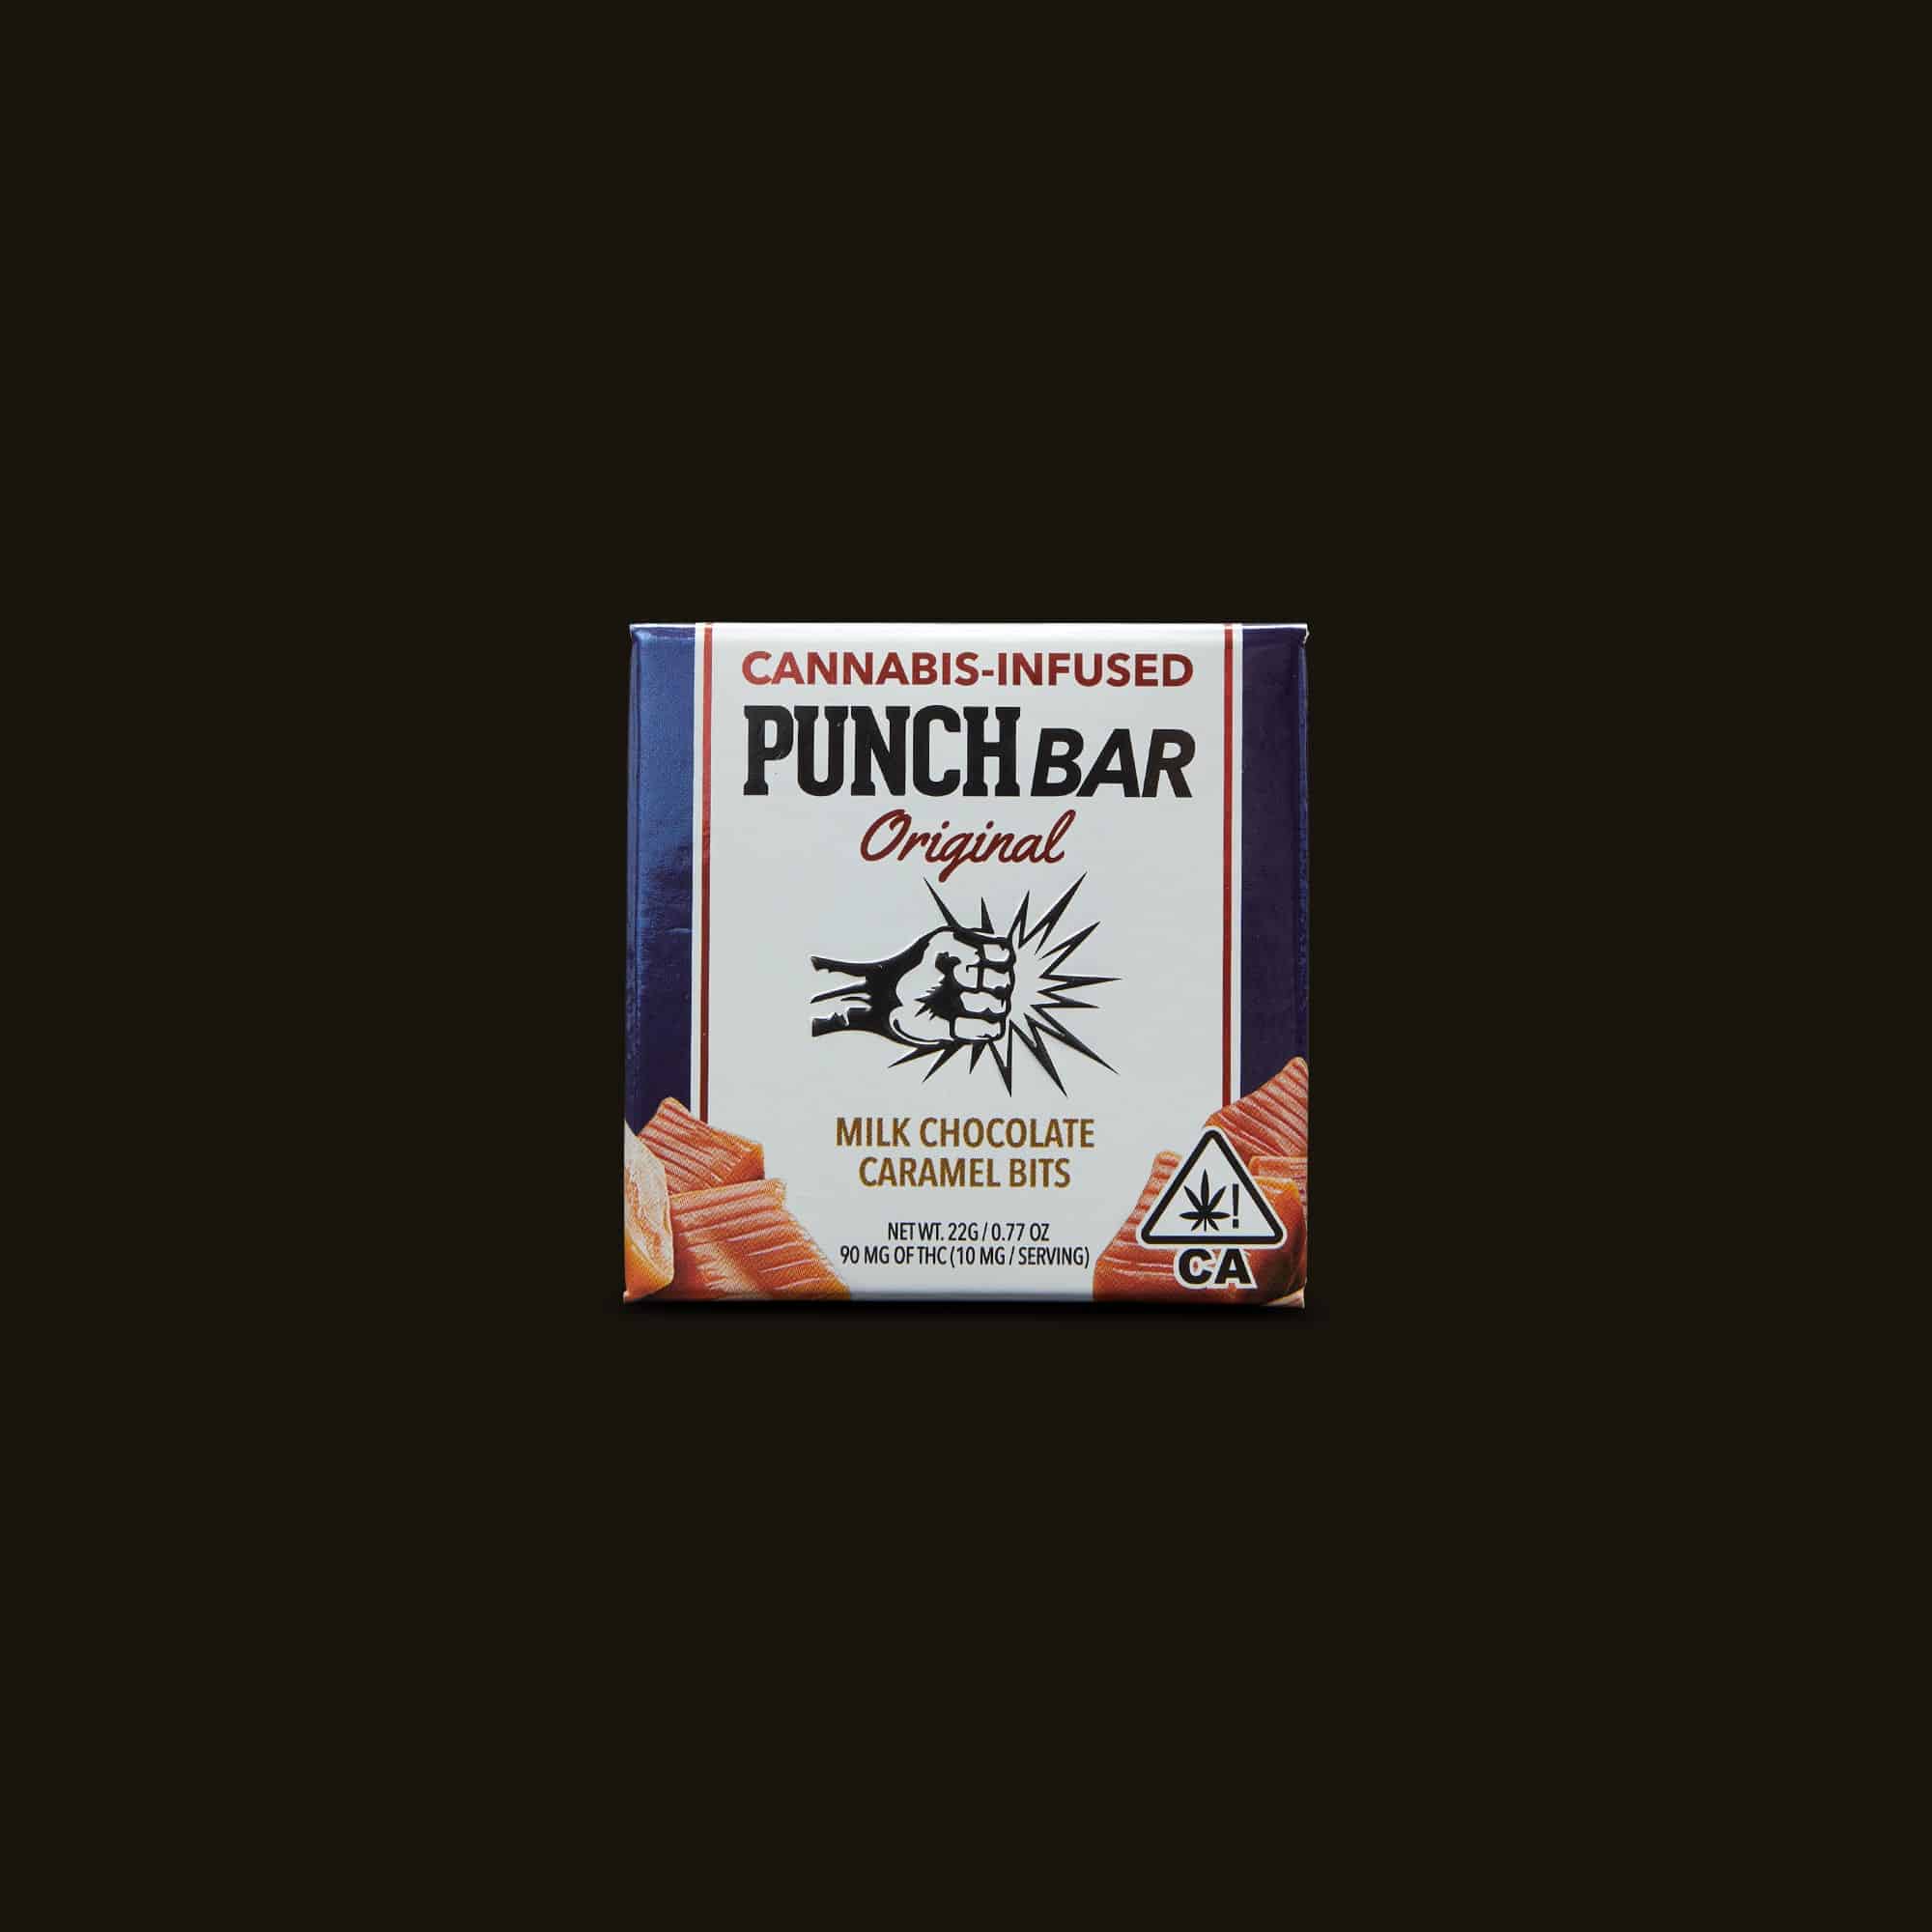 Punch-Punch-Bar-Milk-Chocolate-Carmel-Bits1578-1611335.jpg